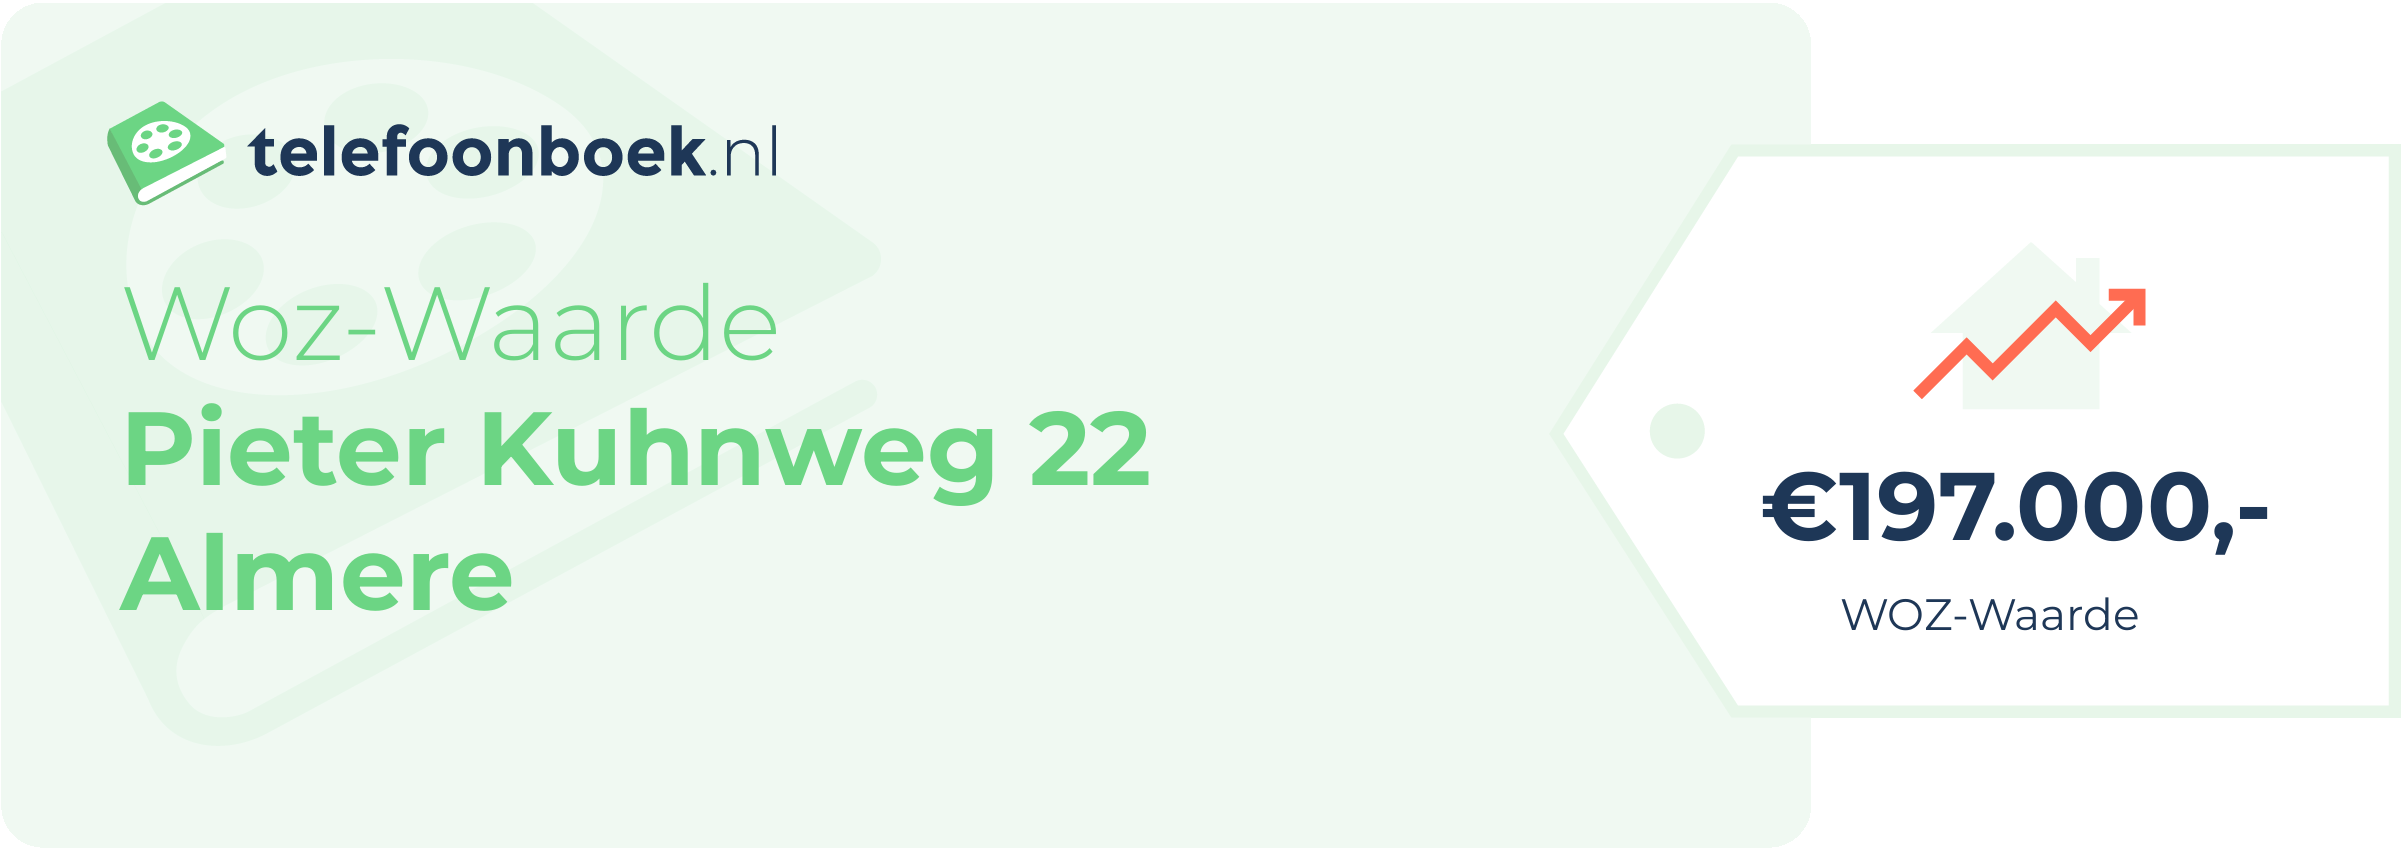 WOZ-waarde Pieter Kuhnweg 22 Almere